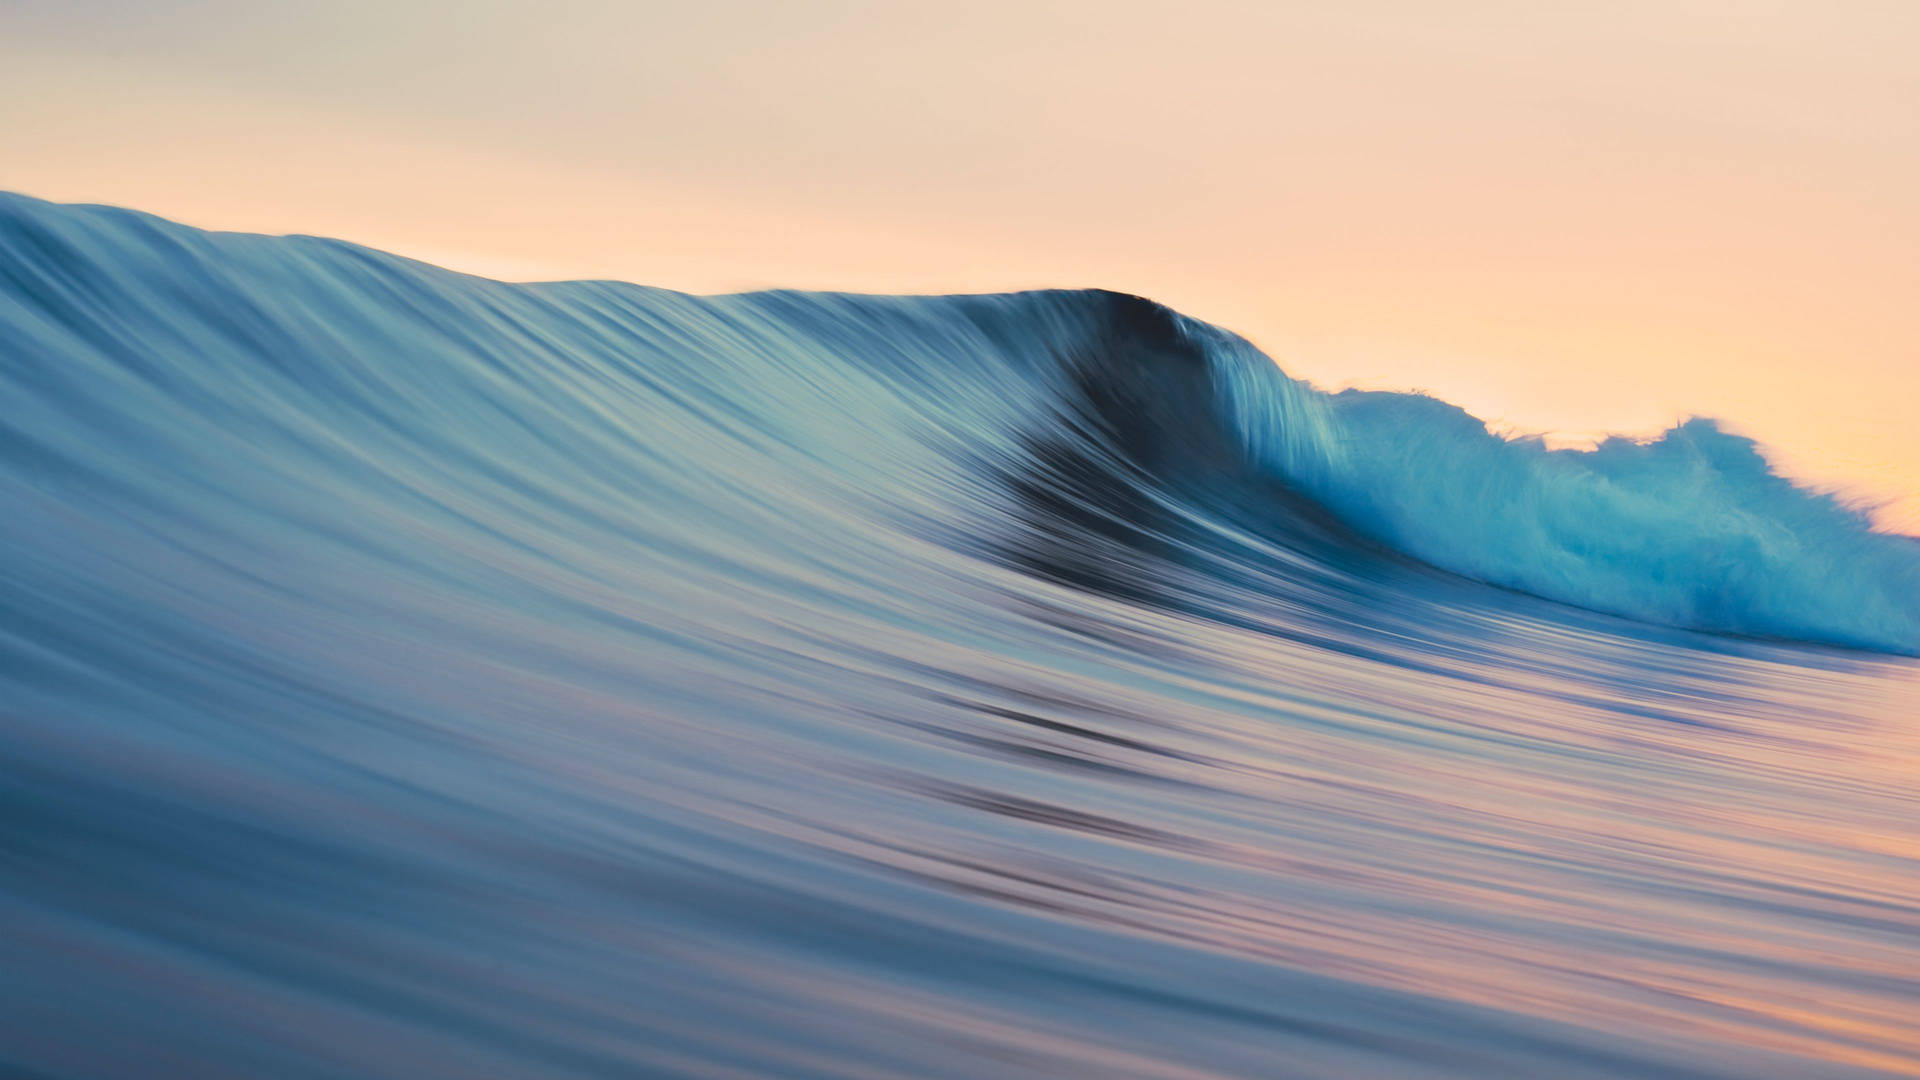 Calm Sea Waves Mac Wallpaper